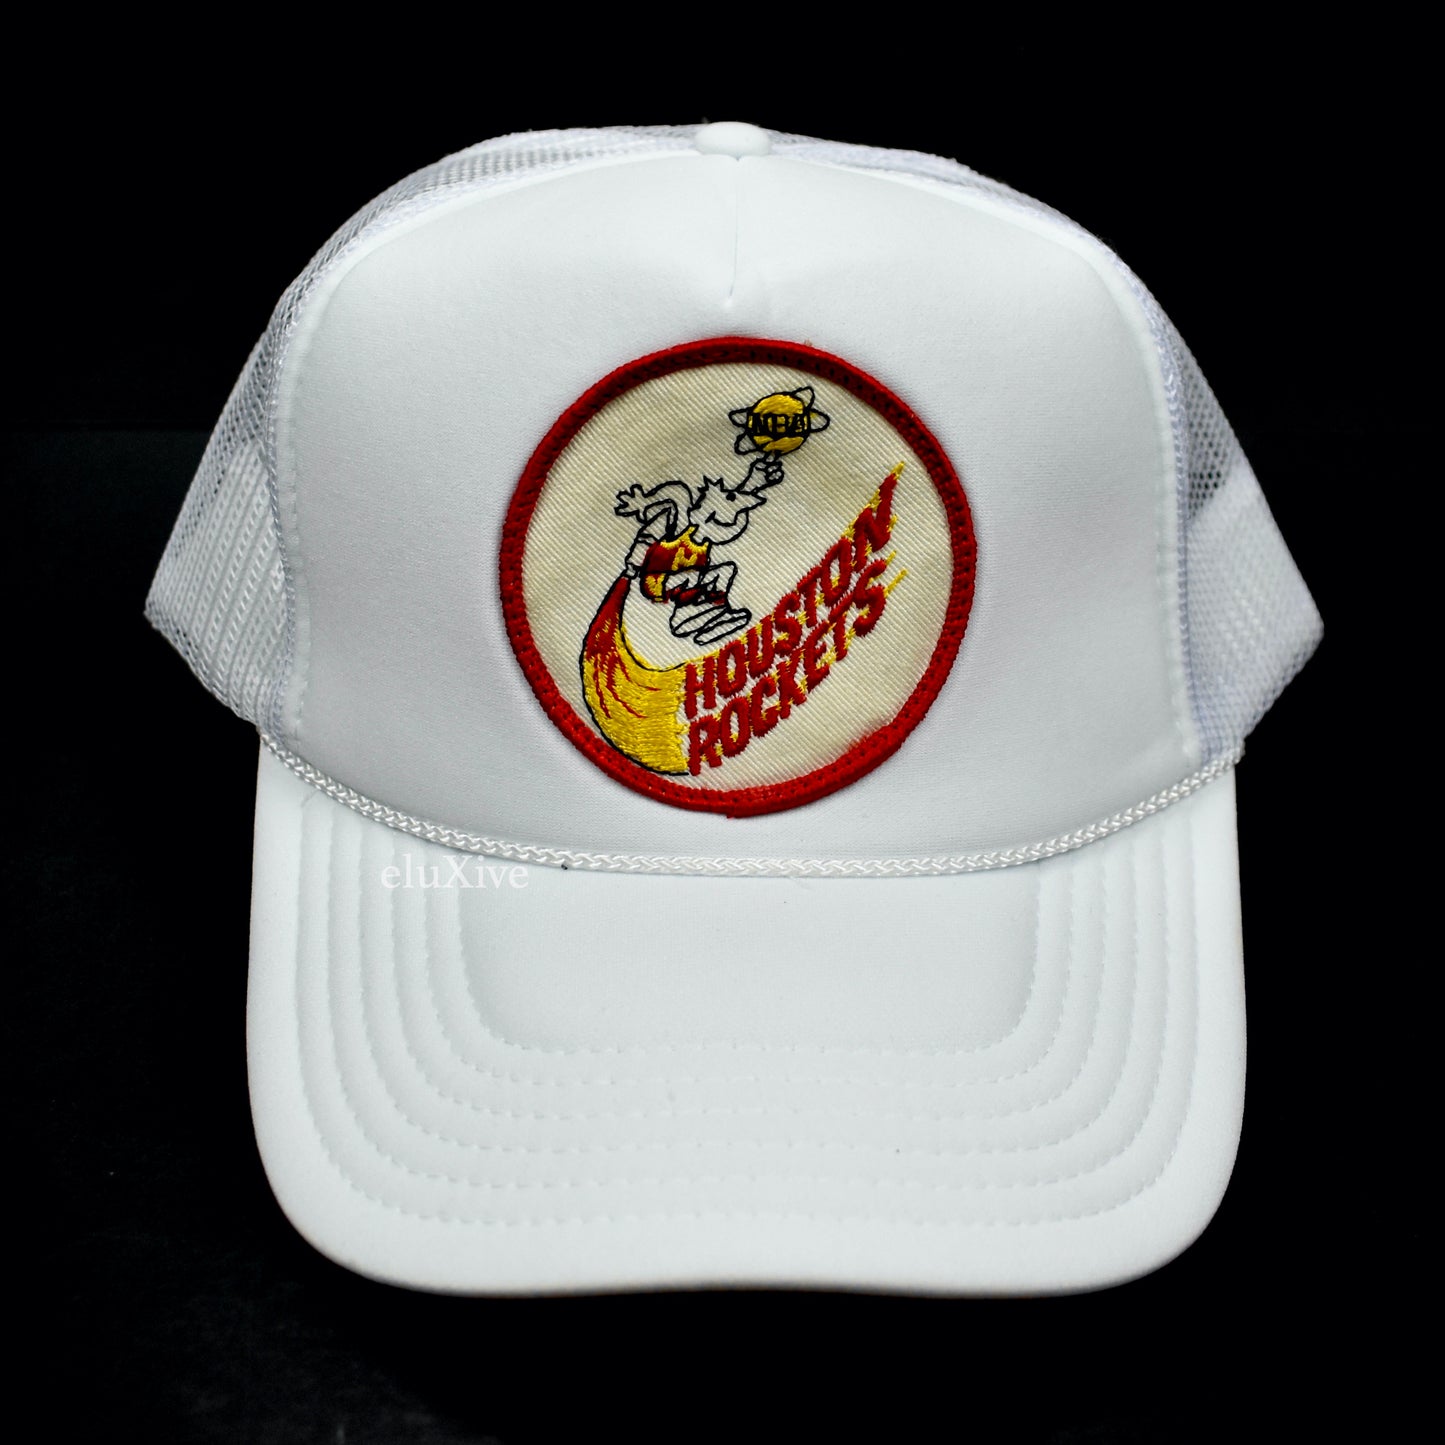 Retro - Houston Rockets 71-72 Vintage Patch Trucker Hat